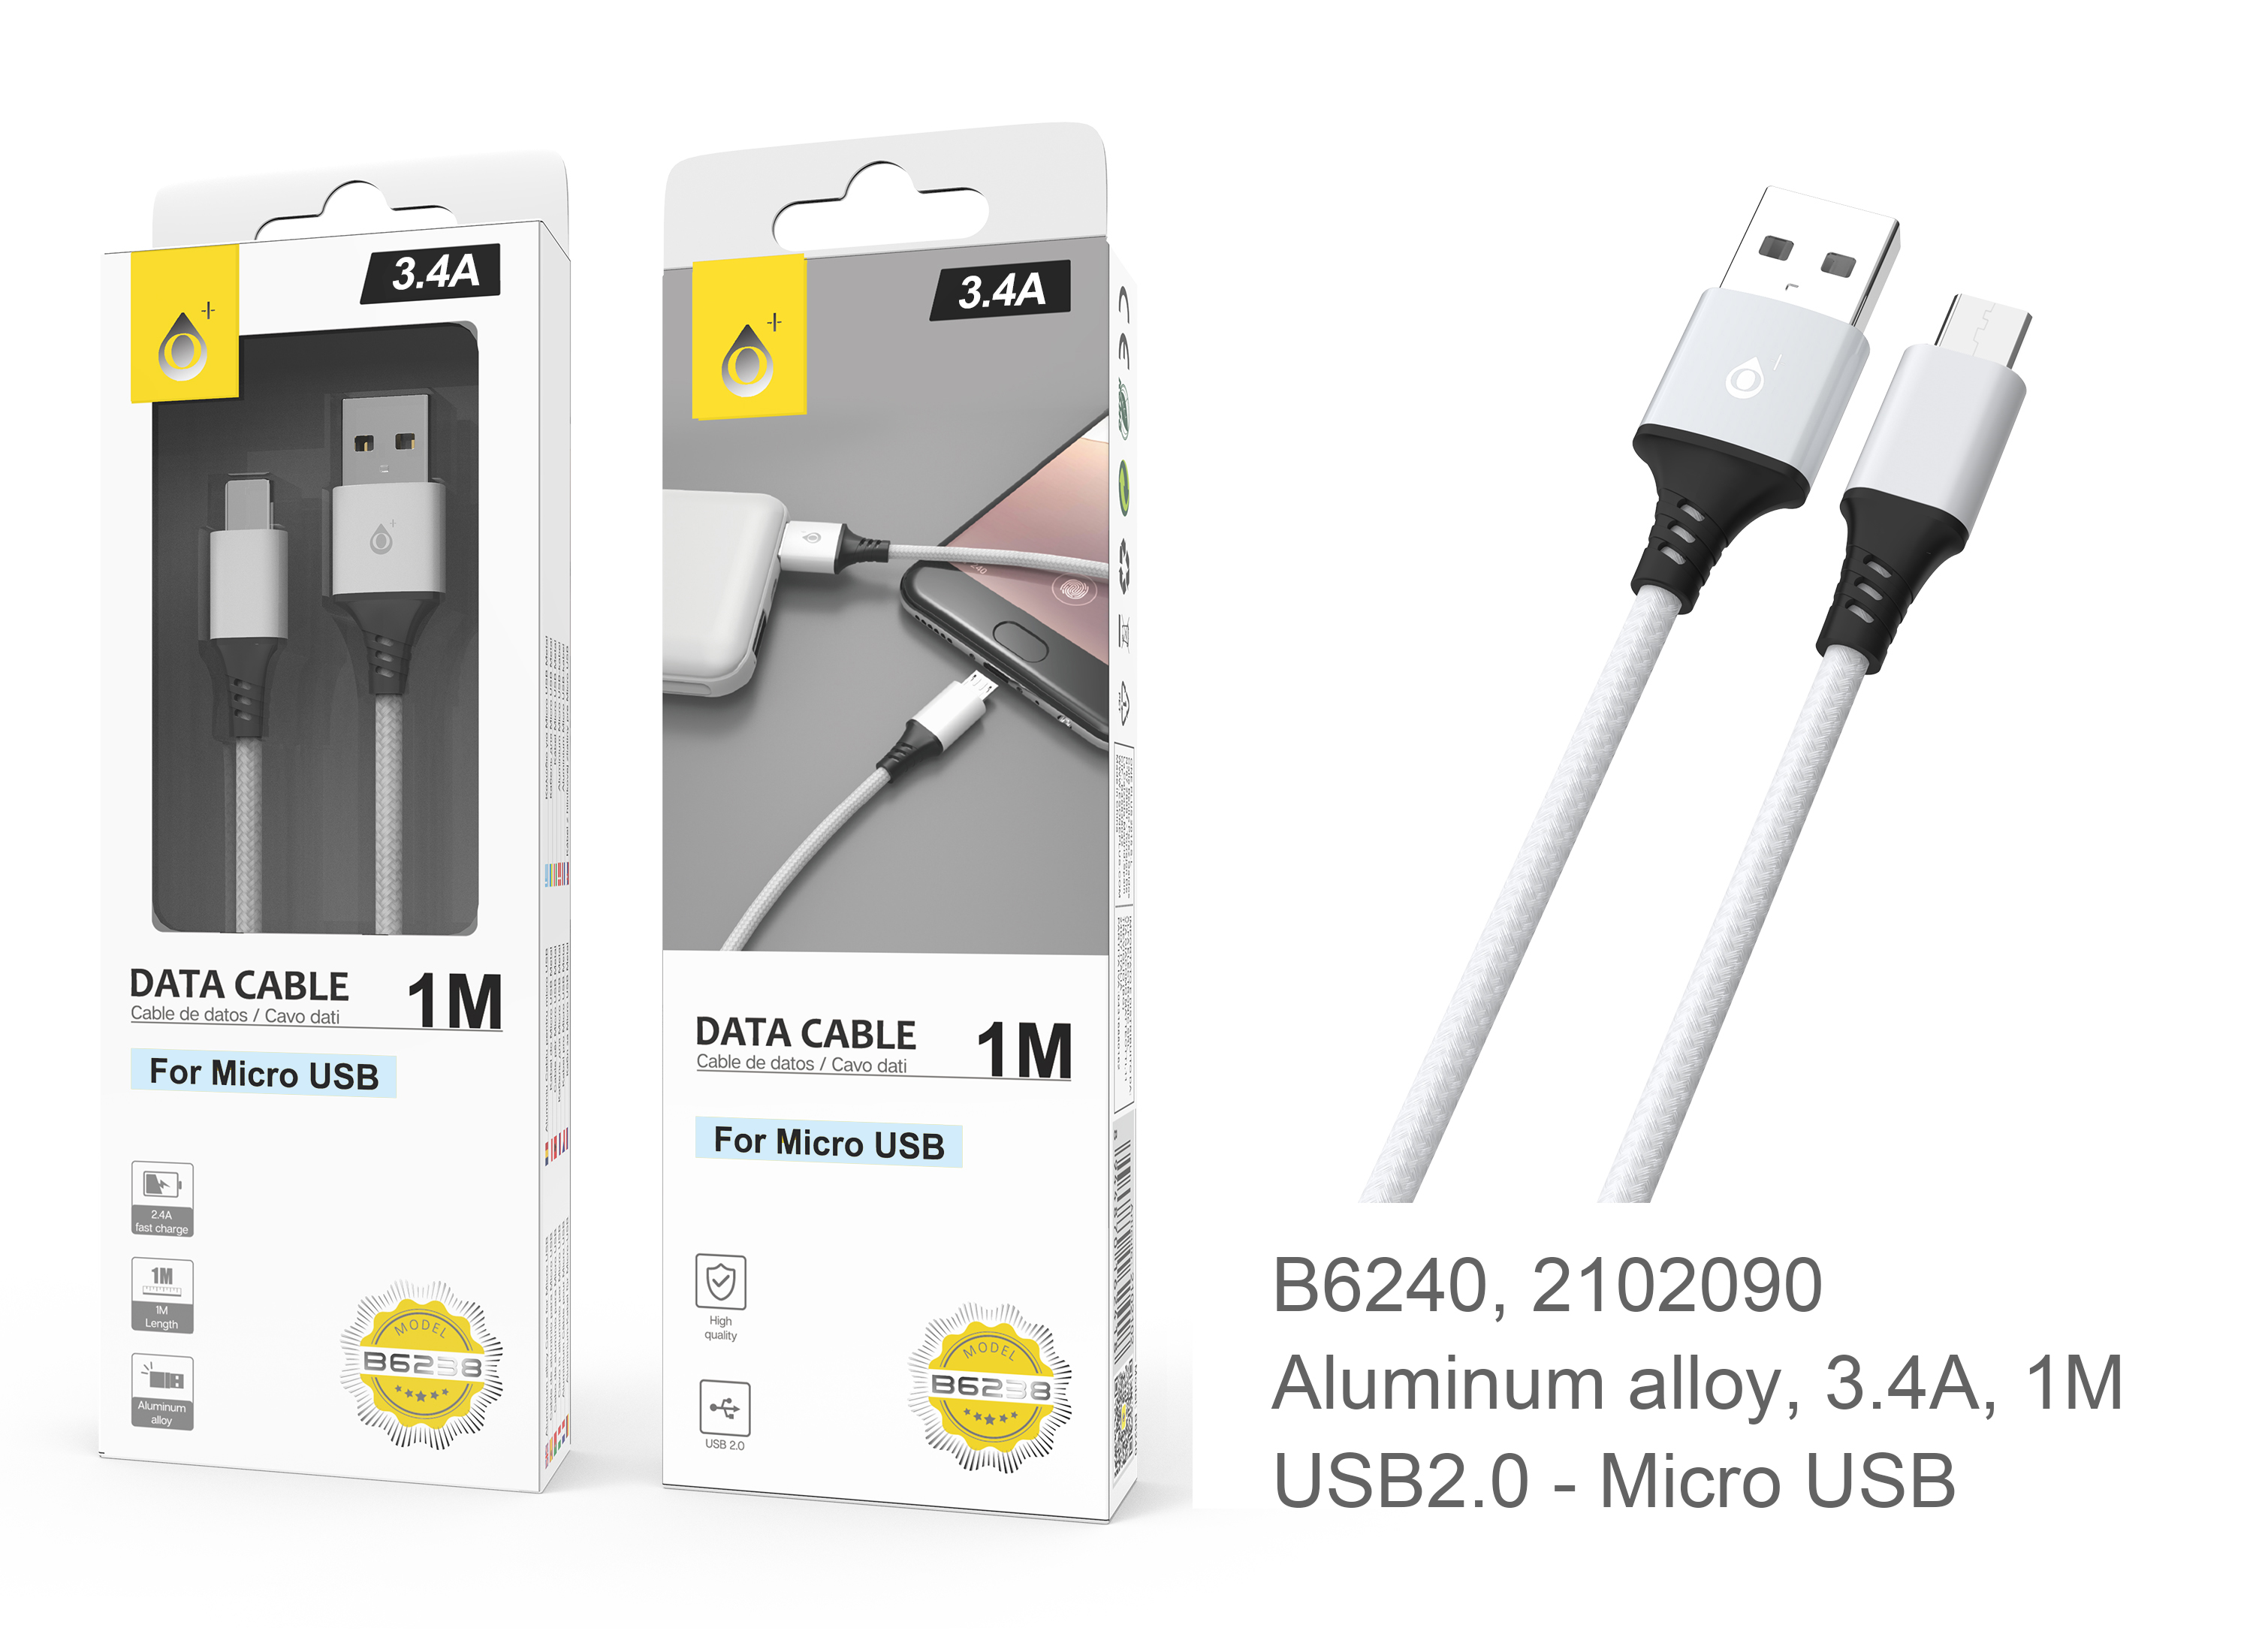 B6238 PL Cable de datos Aluminio S.Basic Giova para Micro USB, 3.4A, 1M , Plata